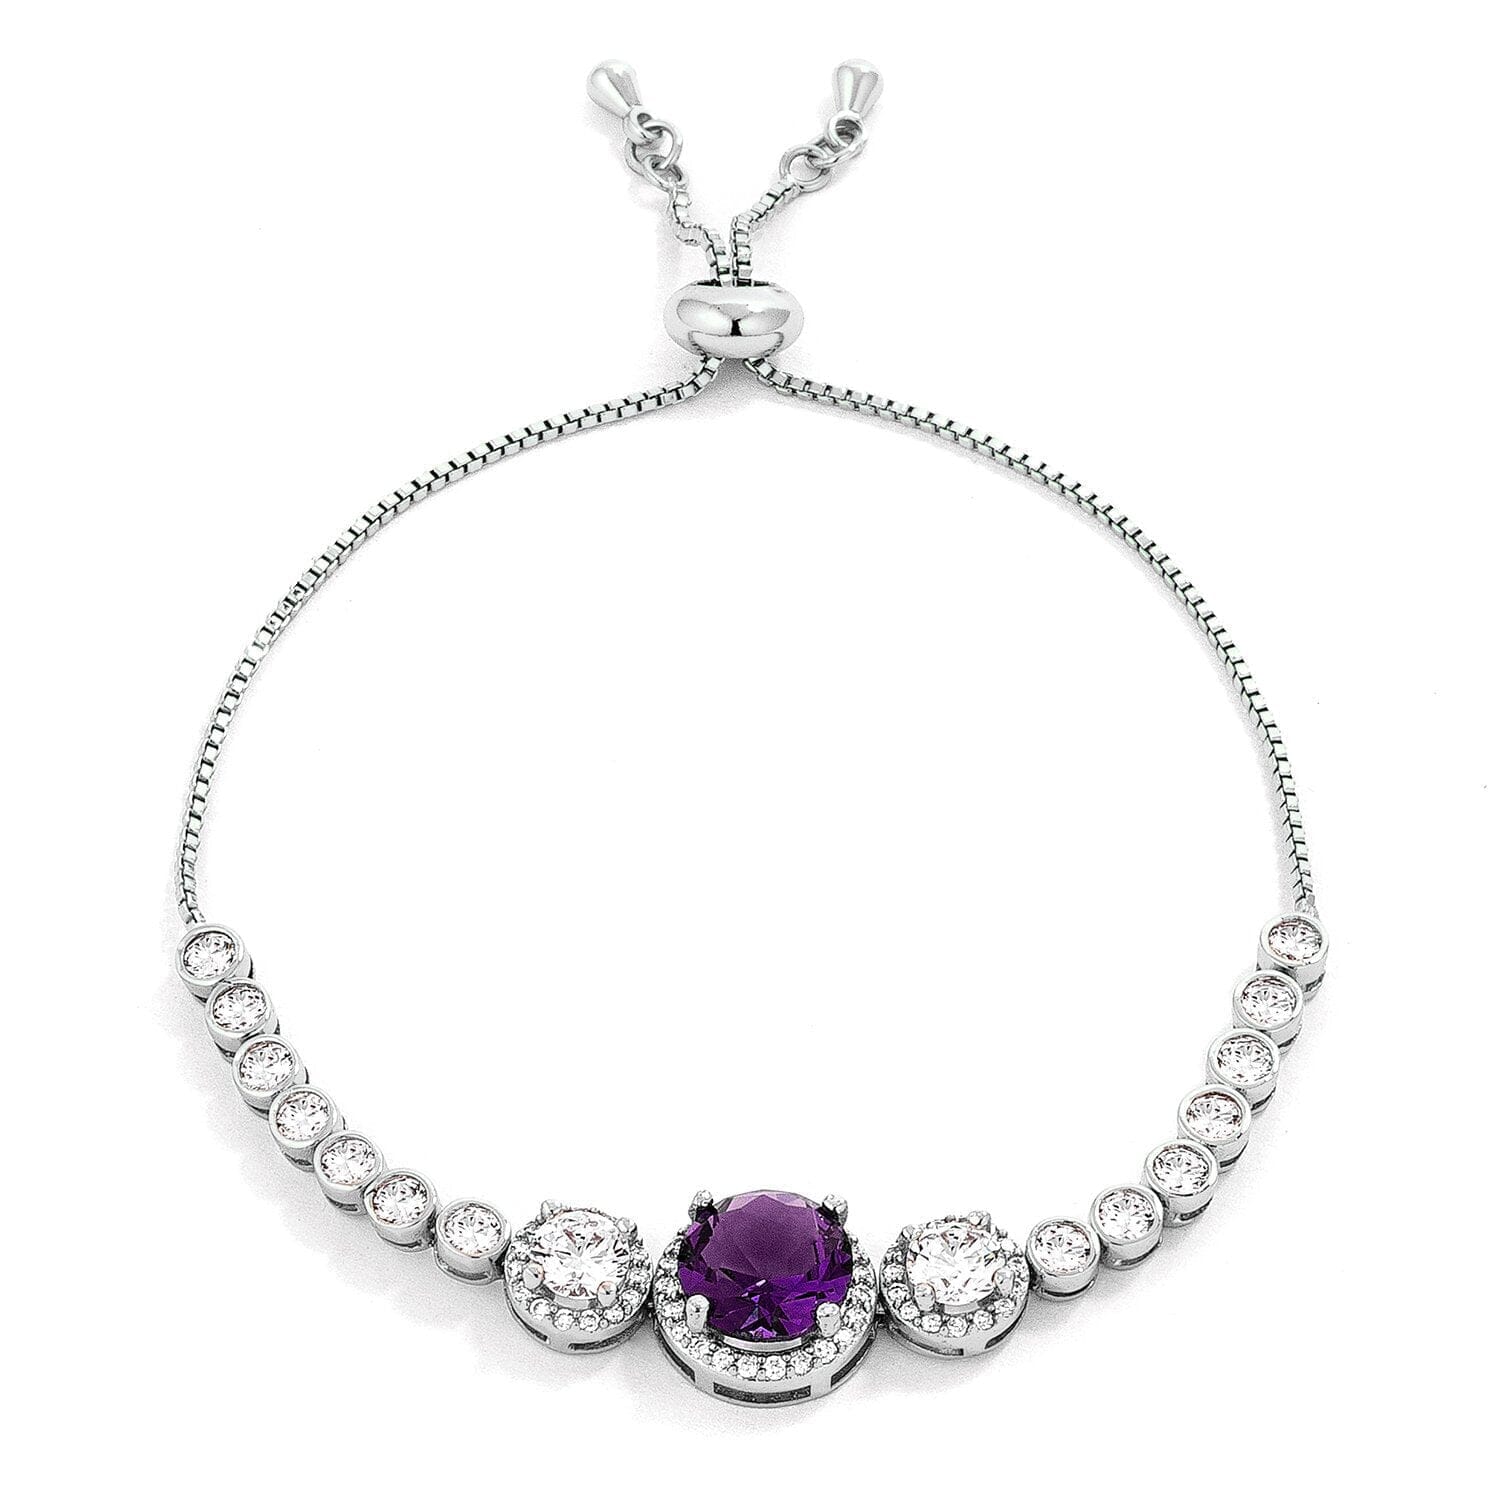 Adjustable Rhodium Plated Graduated Purple & Clear Cubic Zirconia Bolo Style Tennis Bracelet Bracelets Das Juwel 